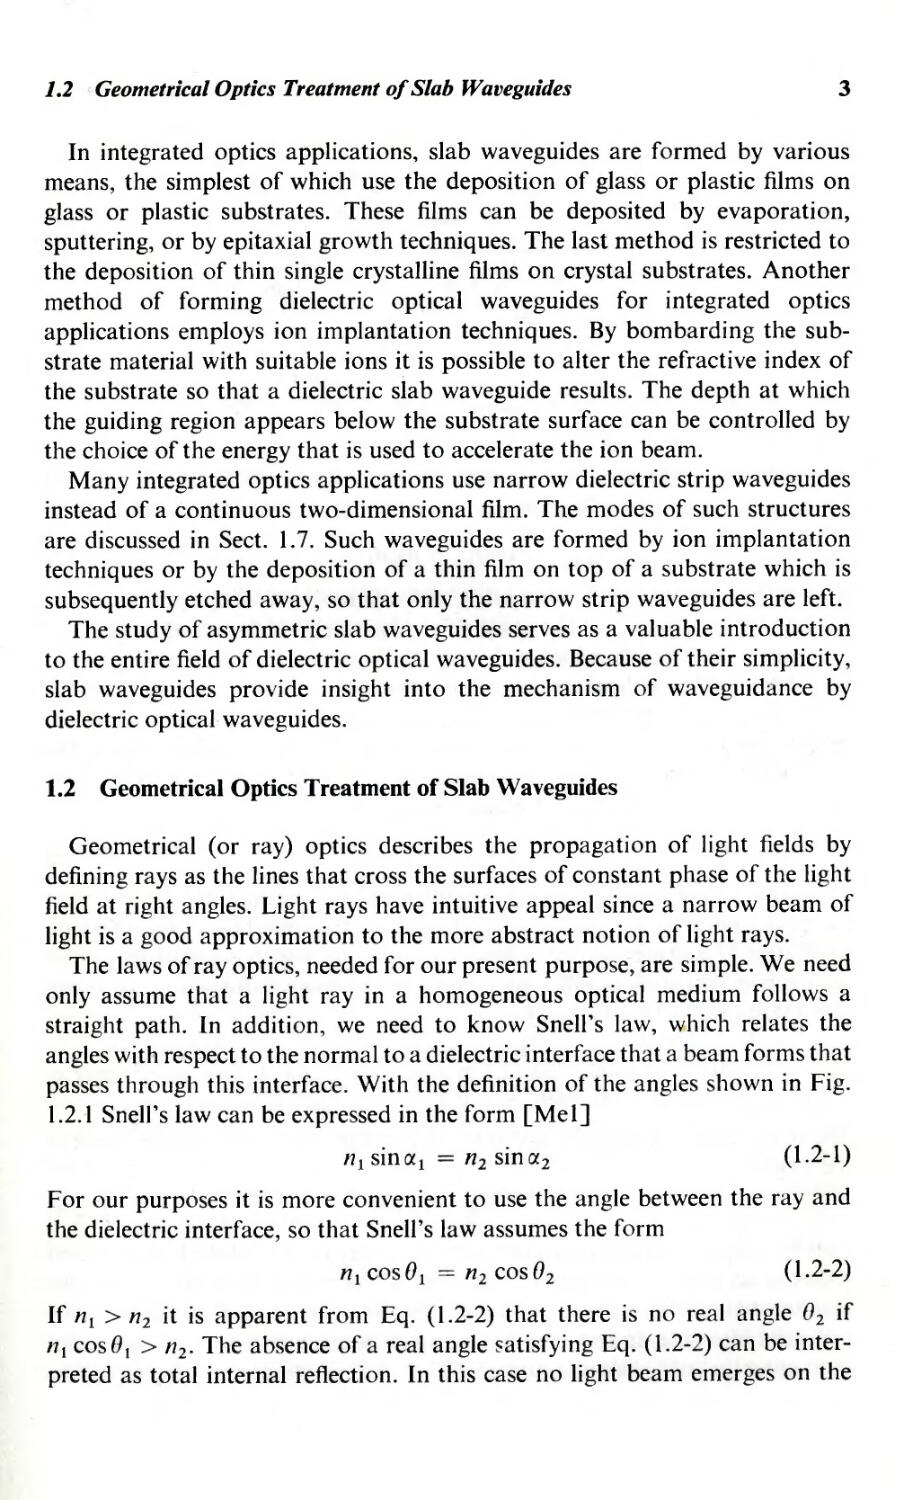 1.2 Geometrical Optics Treatment of Slab Waveguides 3
Geometrical optics, 3
Leaky TE wave, 3
Light rays, 3
Ray optics, 3
--- geometric optics treatment, 3
Snell’s law, 3